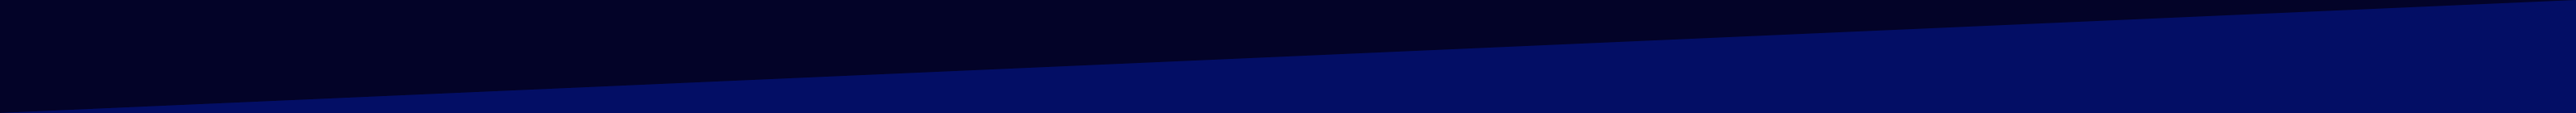 Light blue to dark blue page divider 